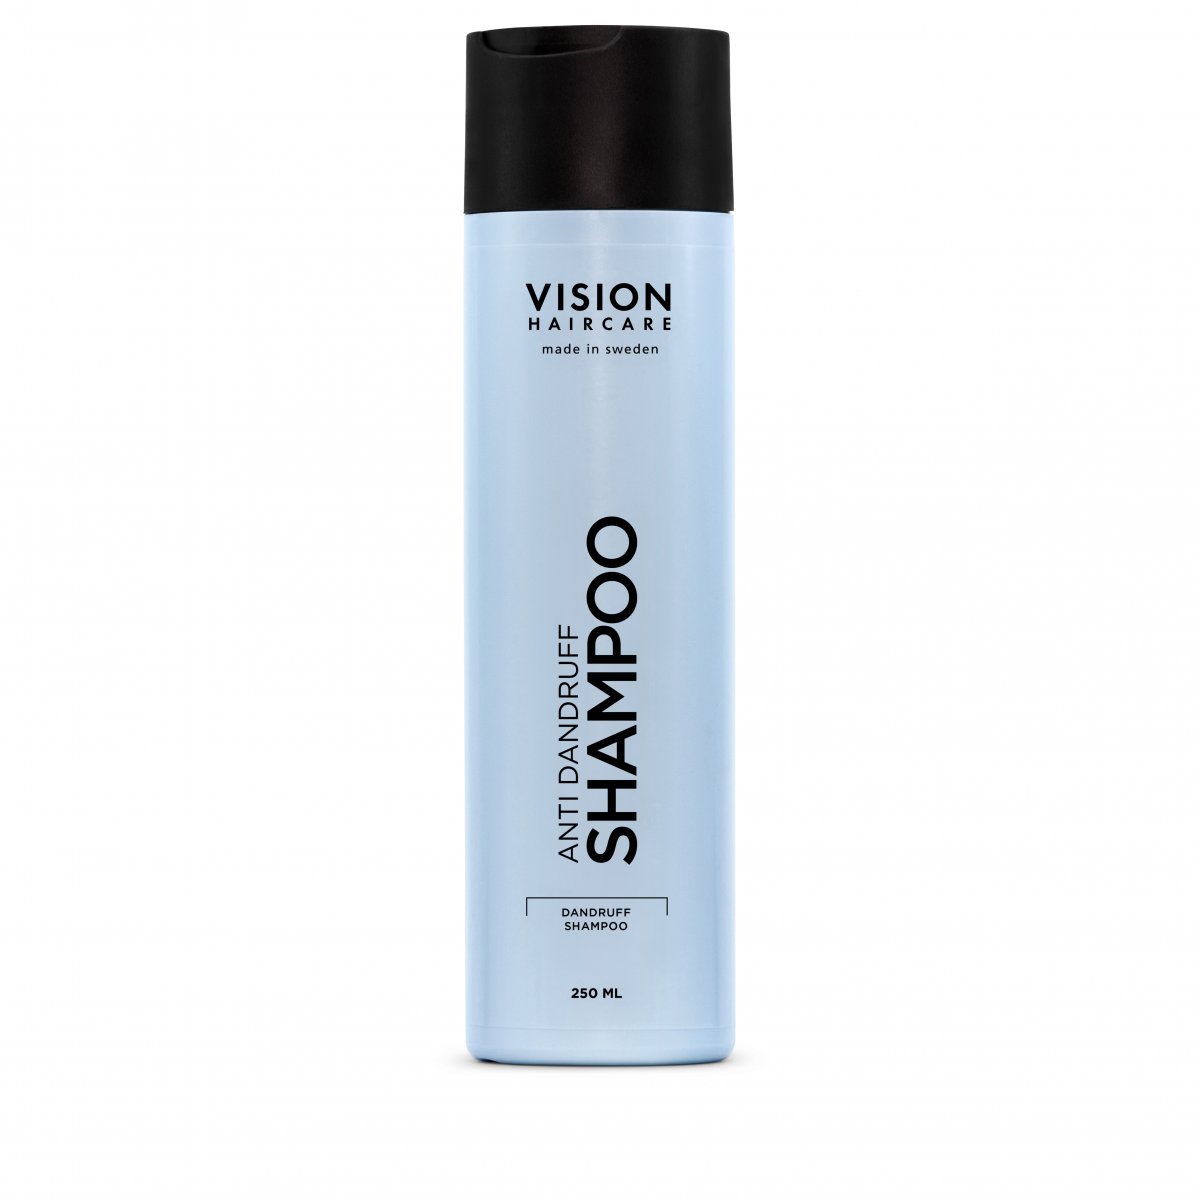 Fejde Overtræder Ekspression Vision. Anti Dandruff Shampoo 250 ml. - Hårprodukter - Luxo Beauty